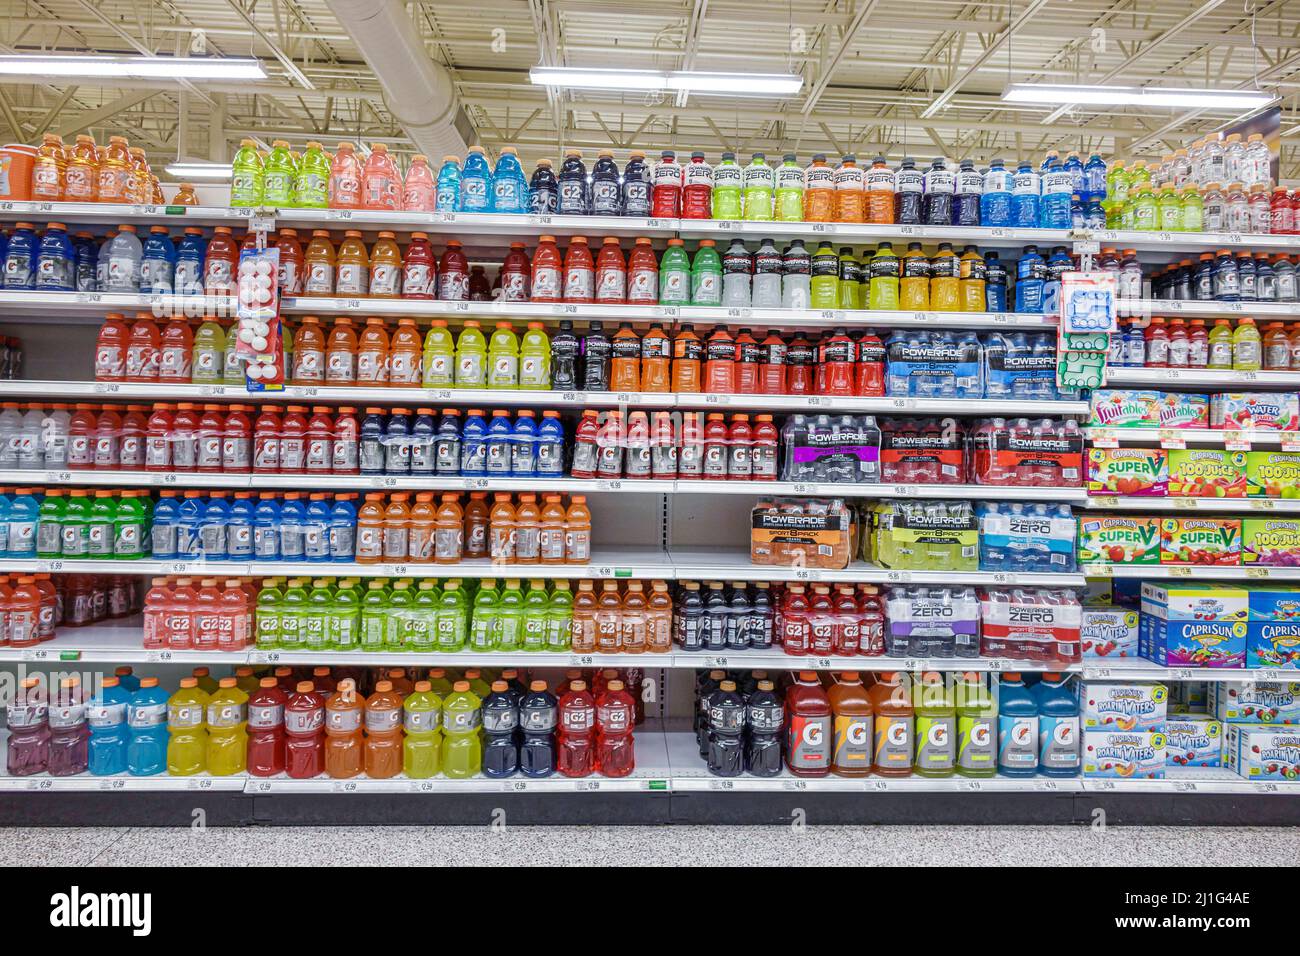 Orlando Florida,Publix grocery store supermarket,display sale bottles sports drinks beverages,shelves inside interior, Stock Photo